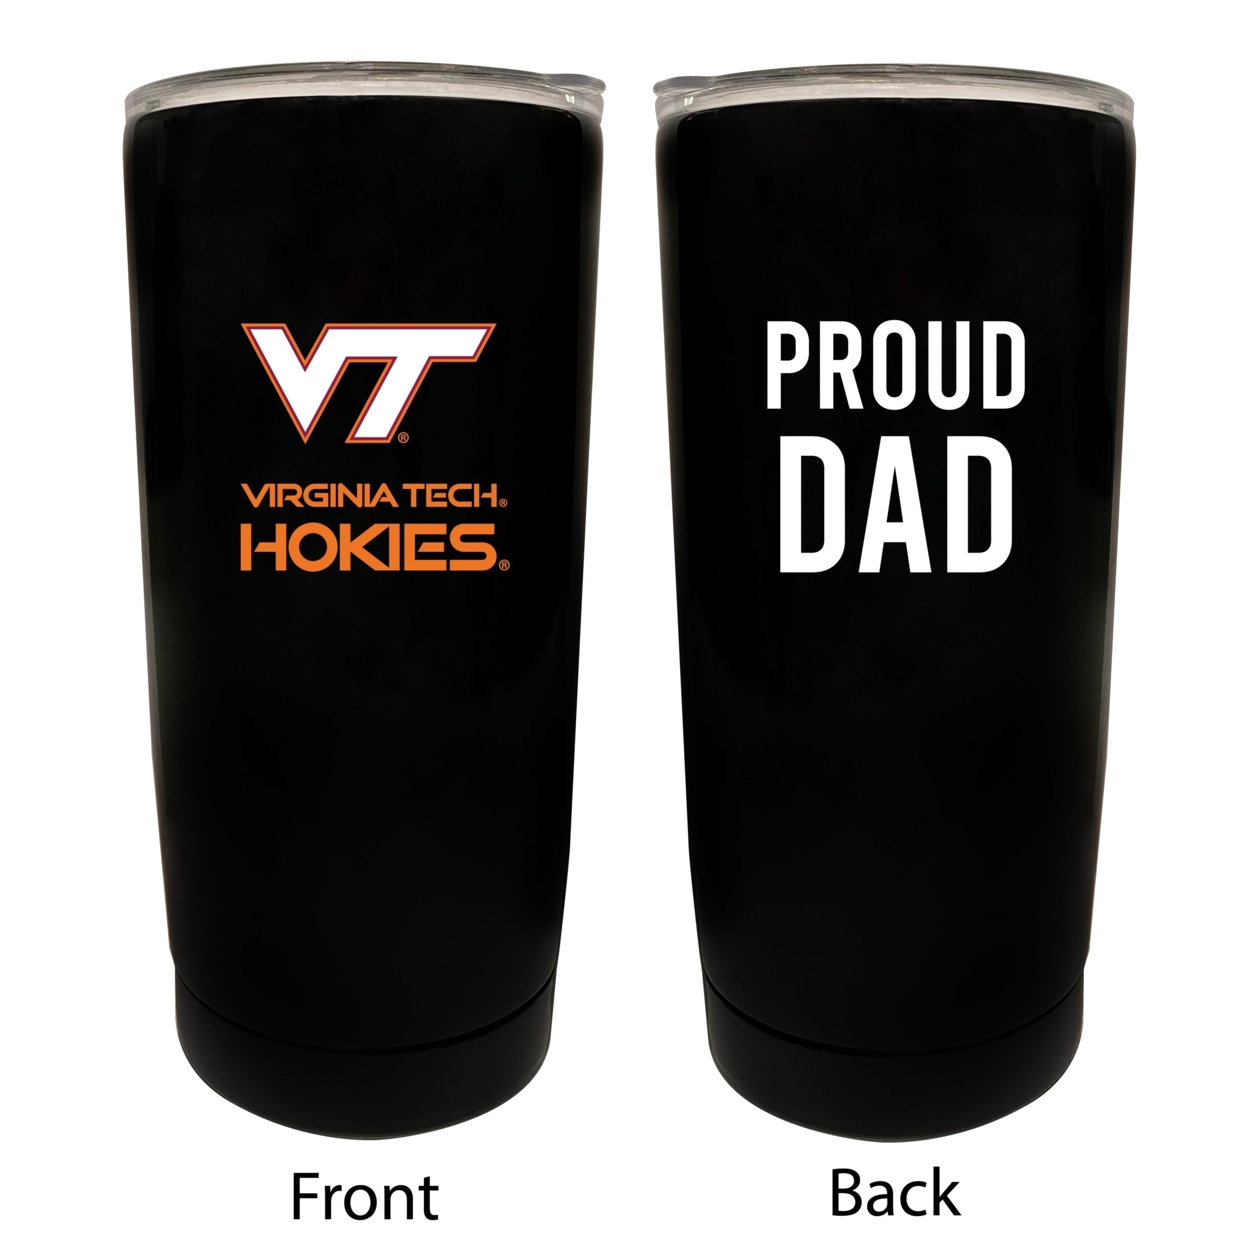 Virginia Tech Hokies Proud Dad 16 Oz Insulated Stainless Steel Tumblers